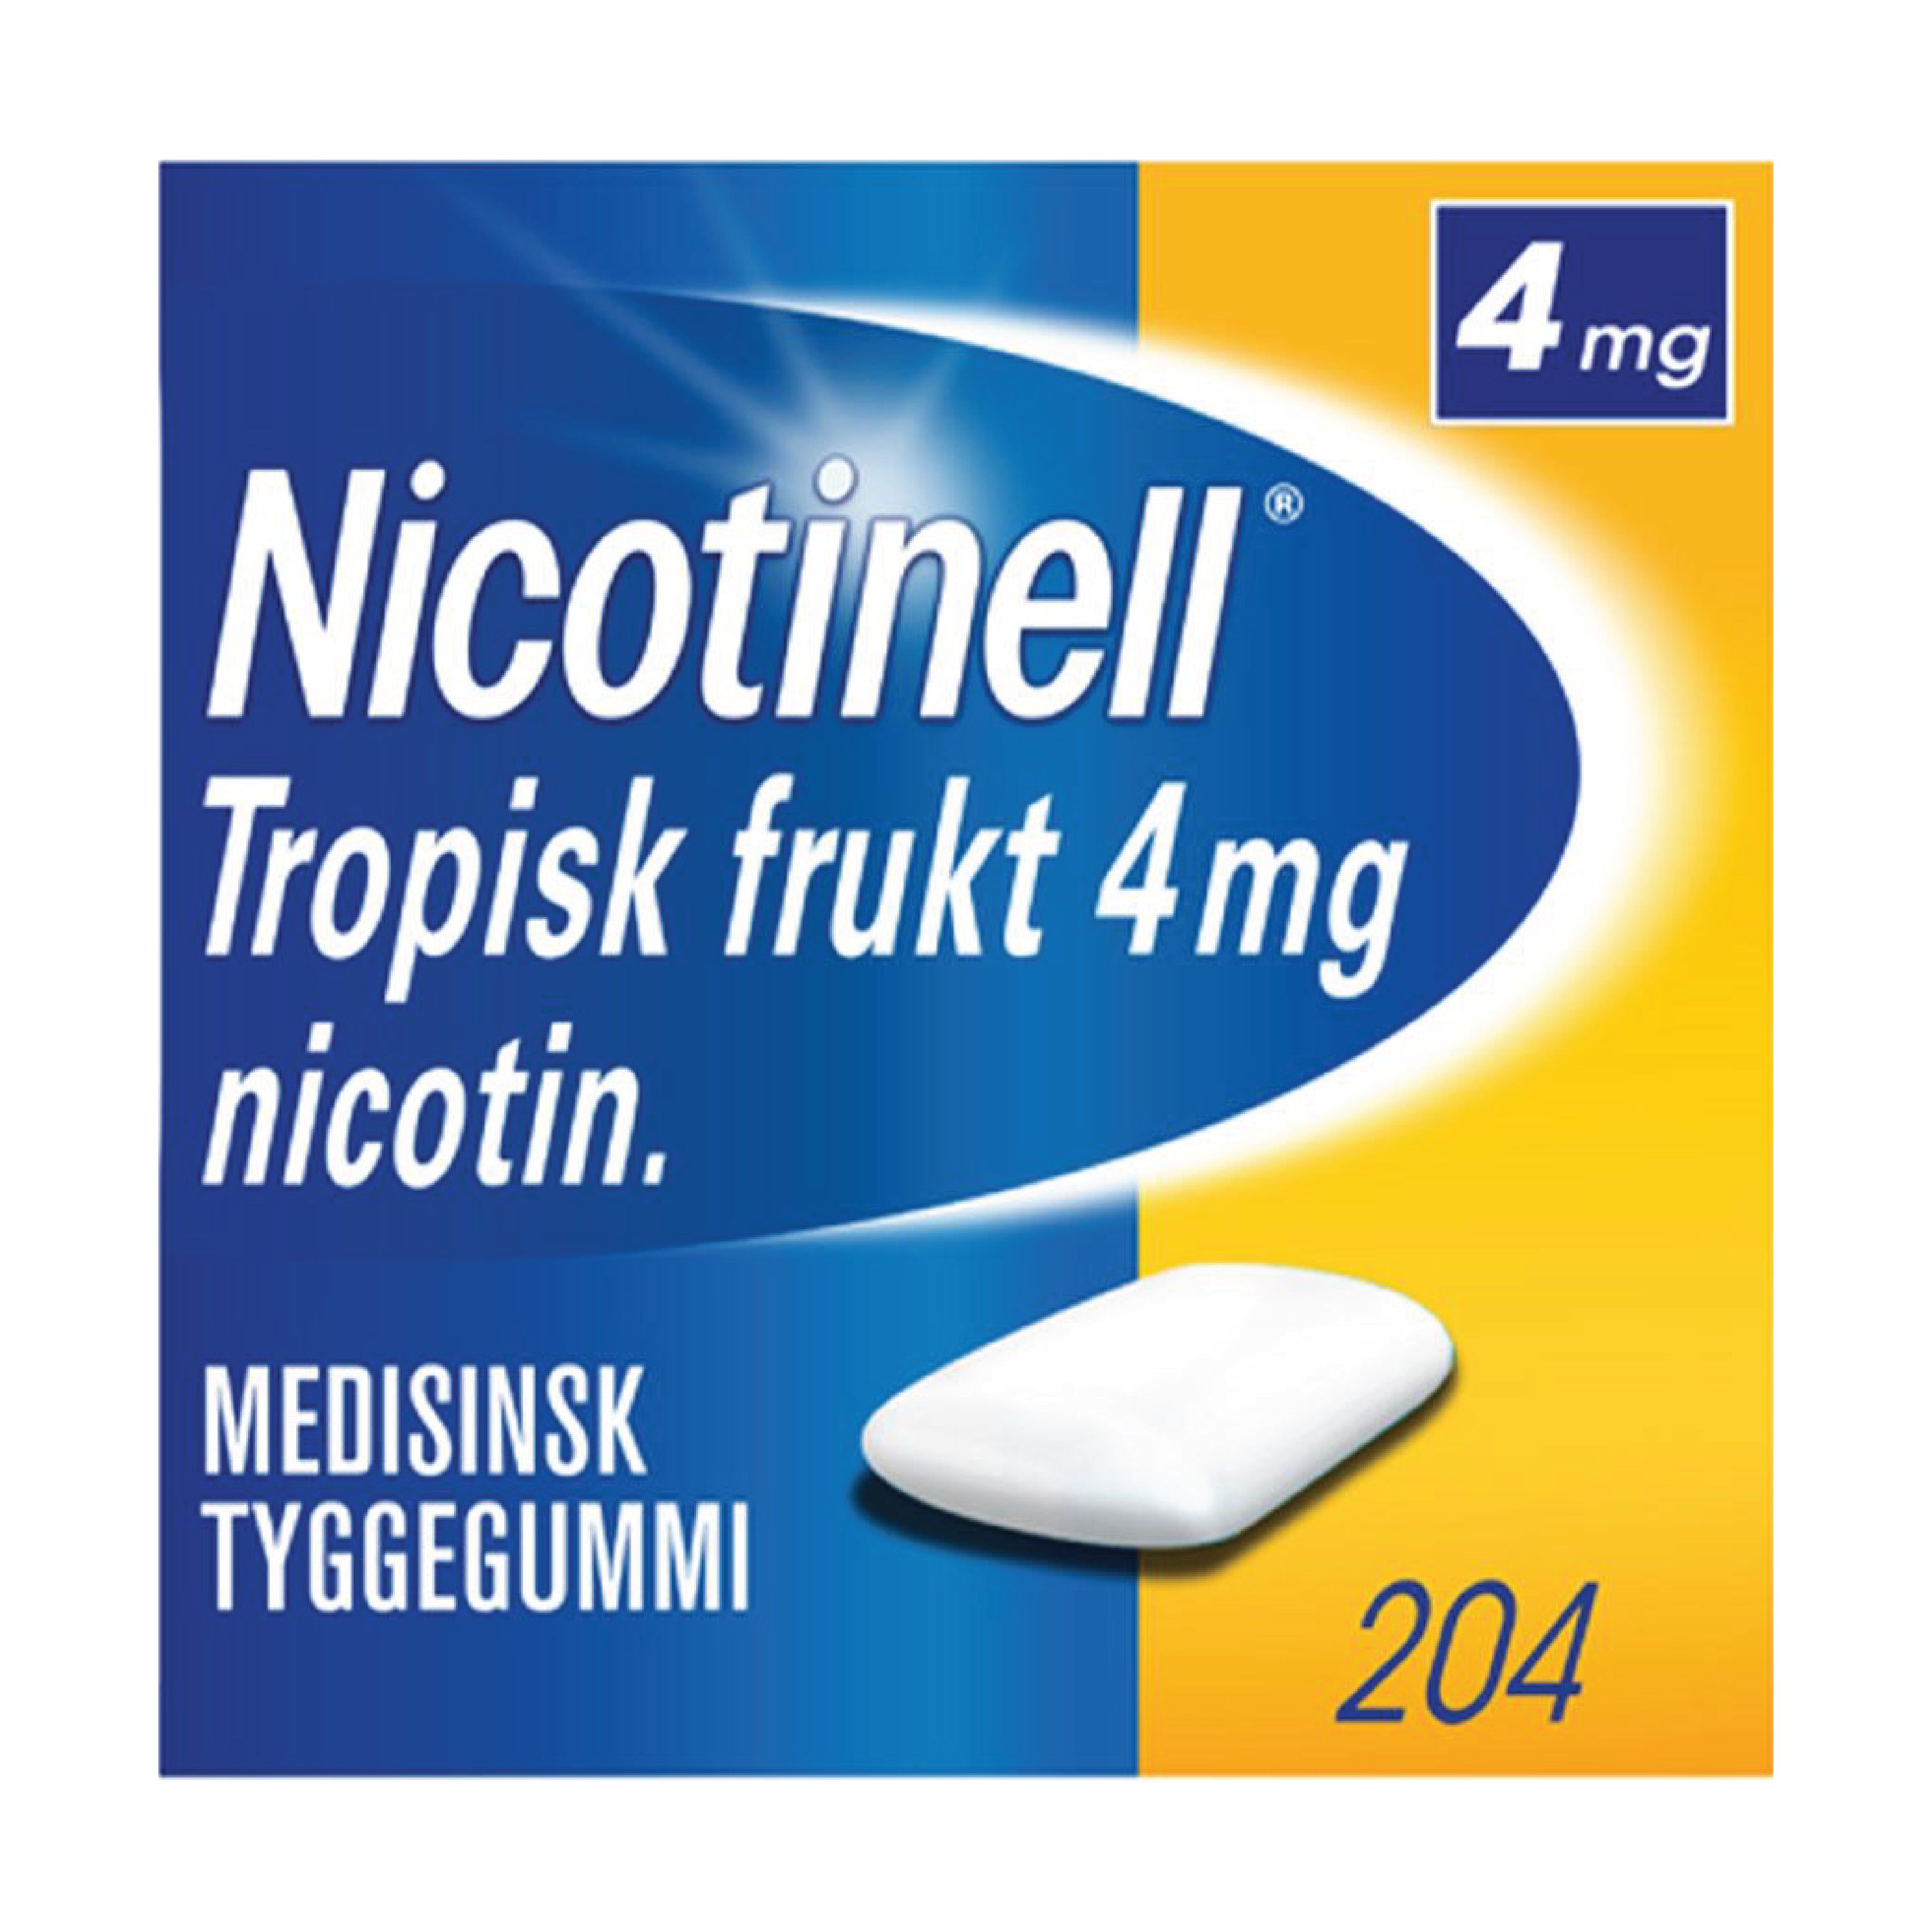 Nicotinell Tyggegummi 4mg tropisk frukt, 204 stk.